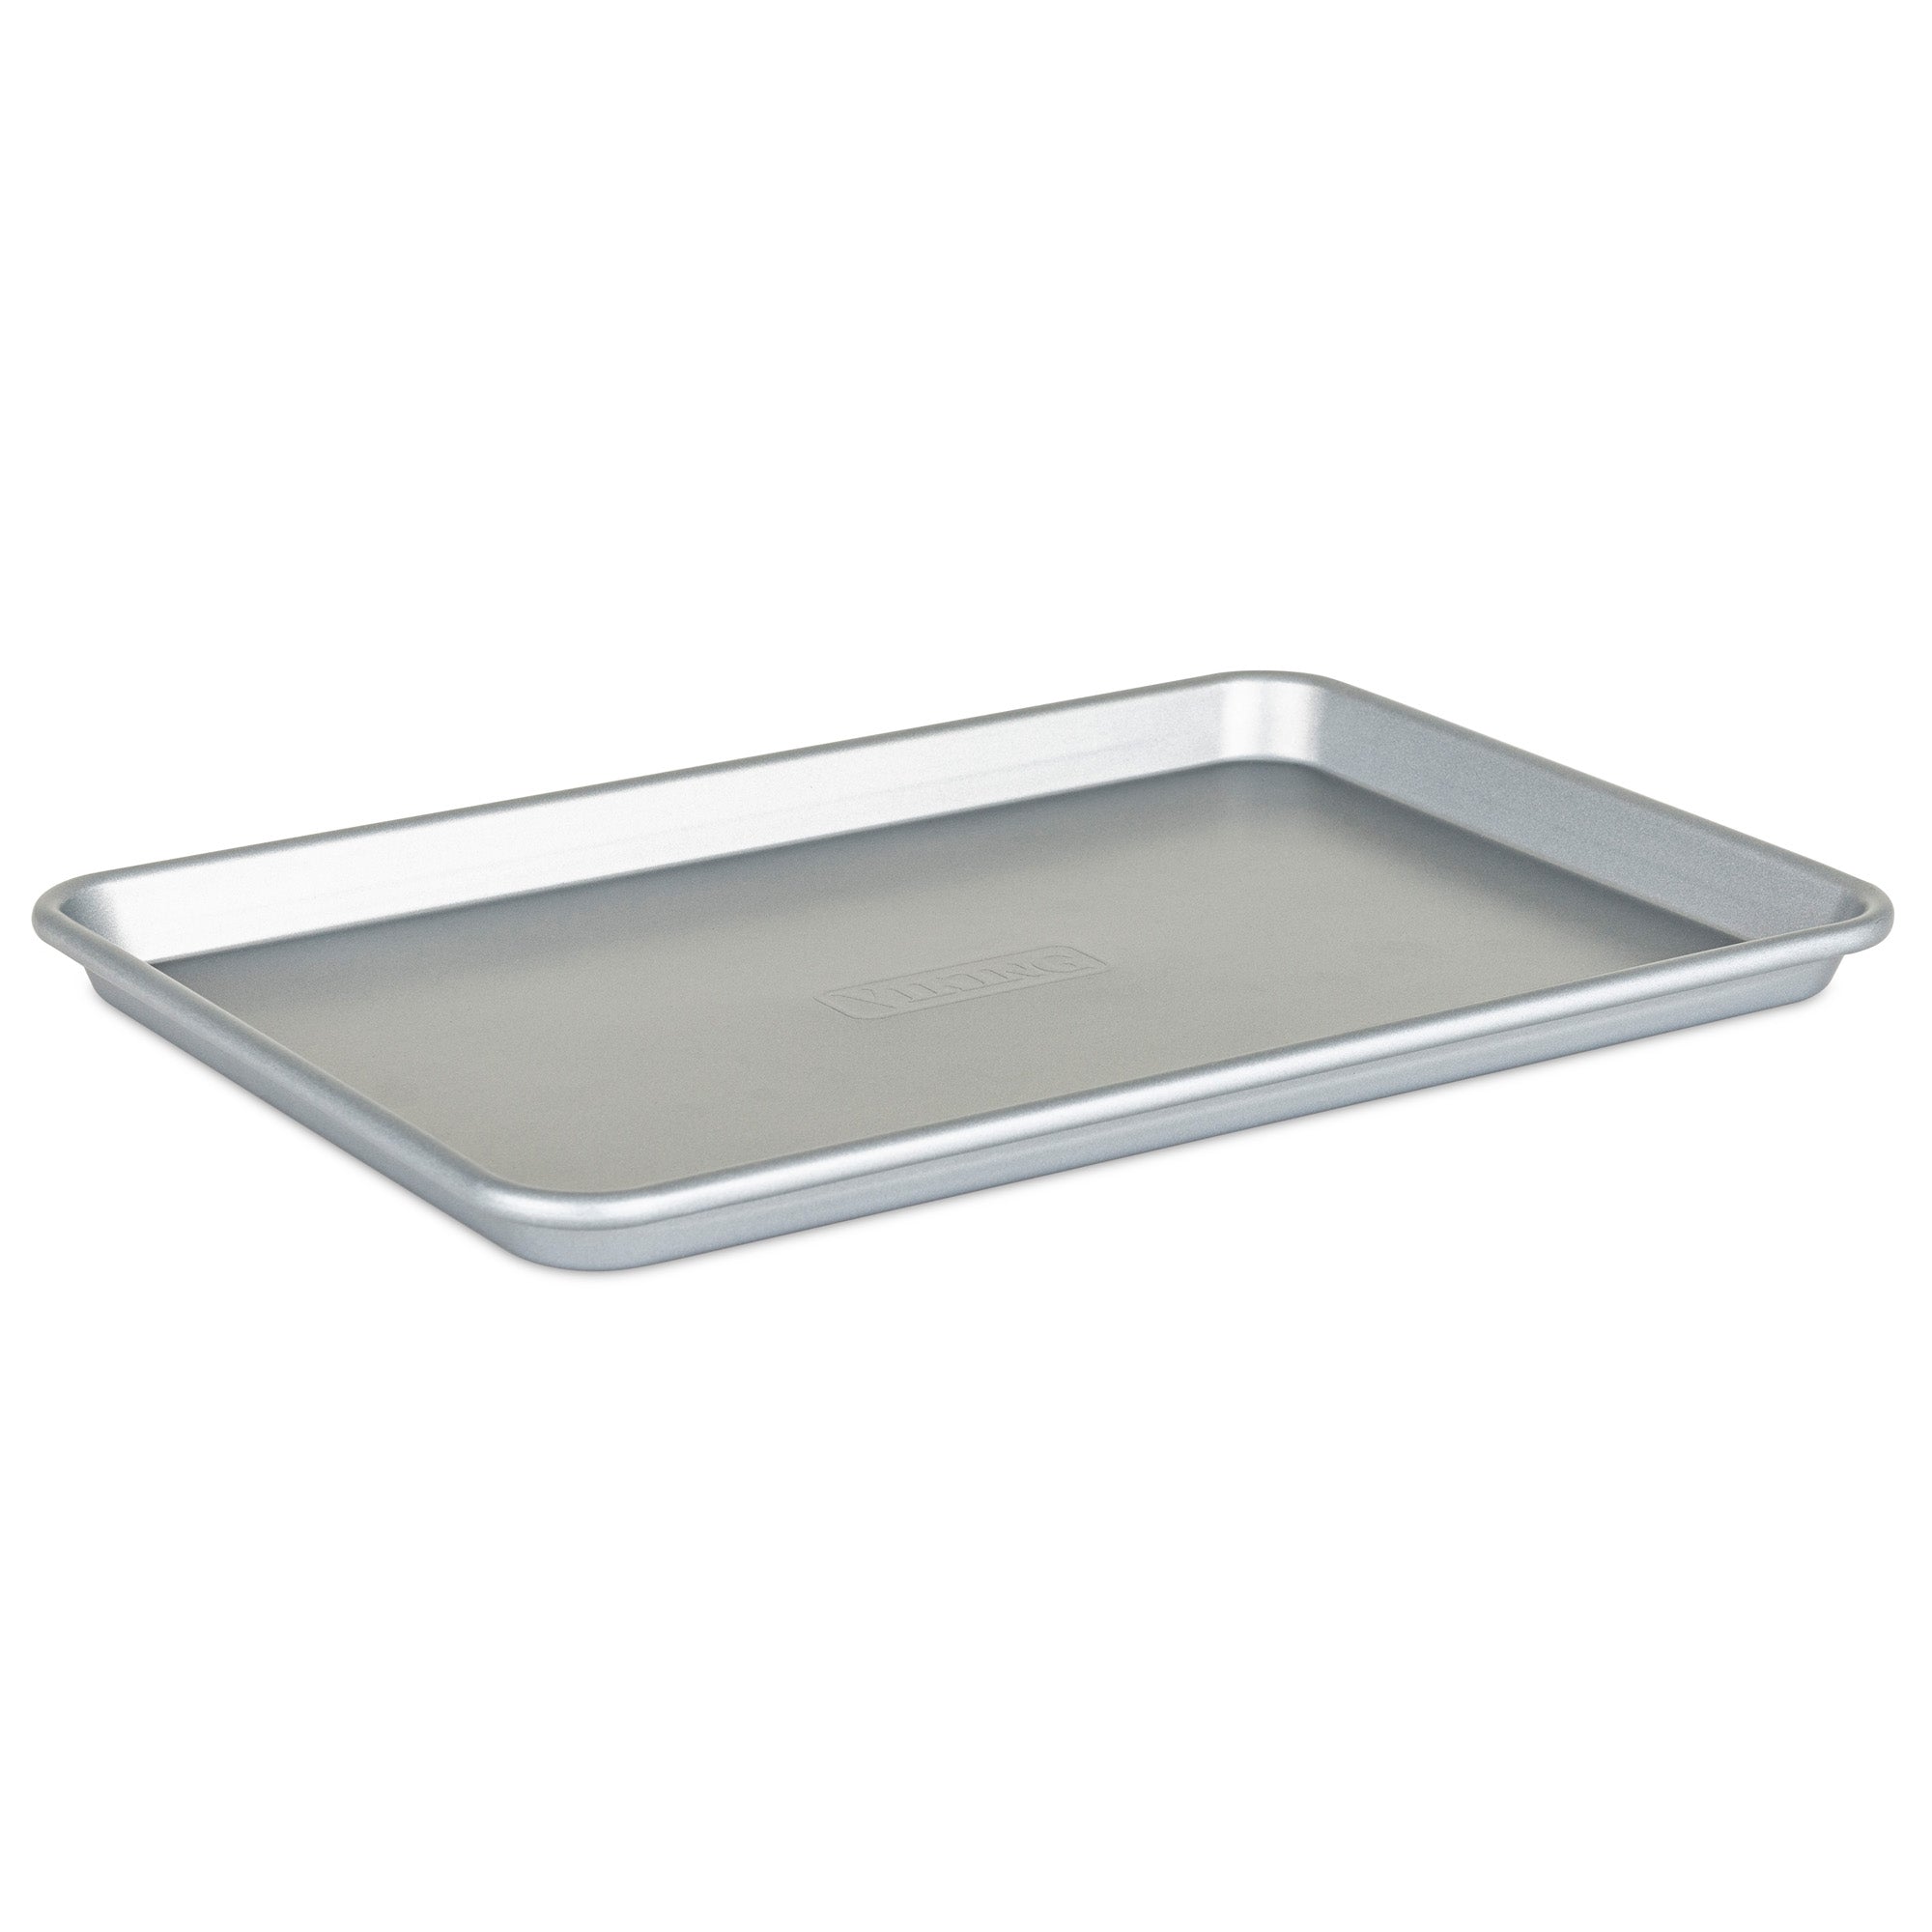 Yesbay Baking Sheet Roasting Nonstick Stainless Steel Heat Resistant Baking Pan for Kitchen,XL, Size: 12.2